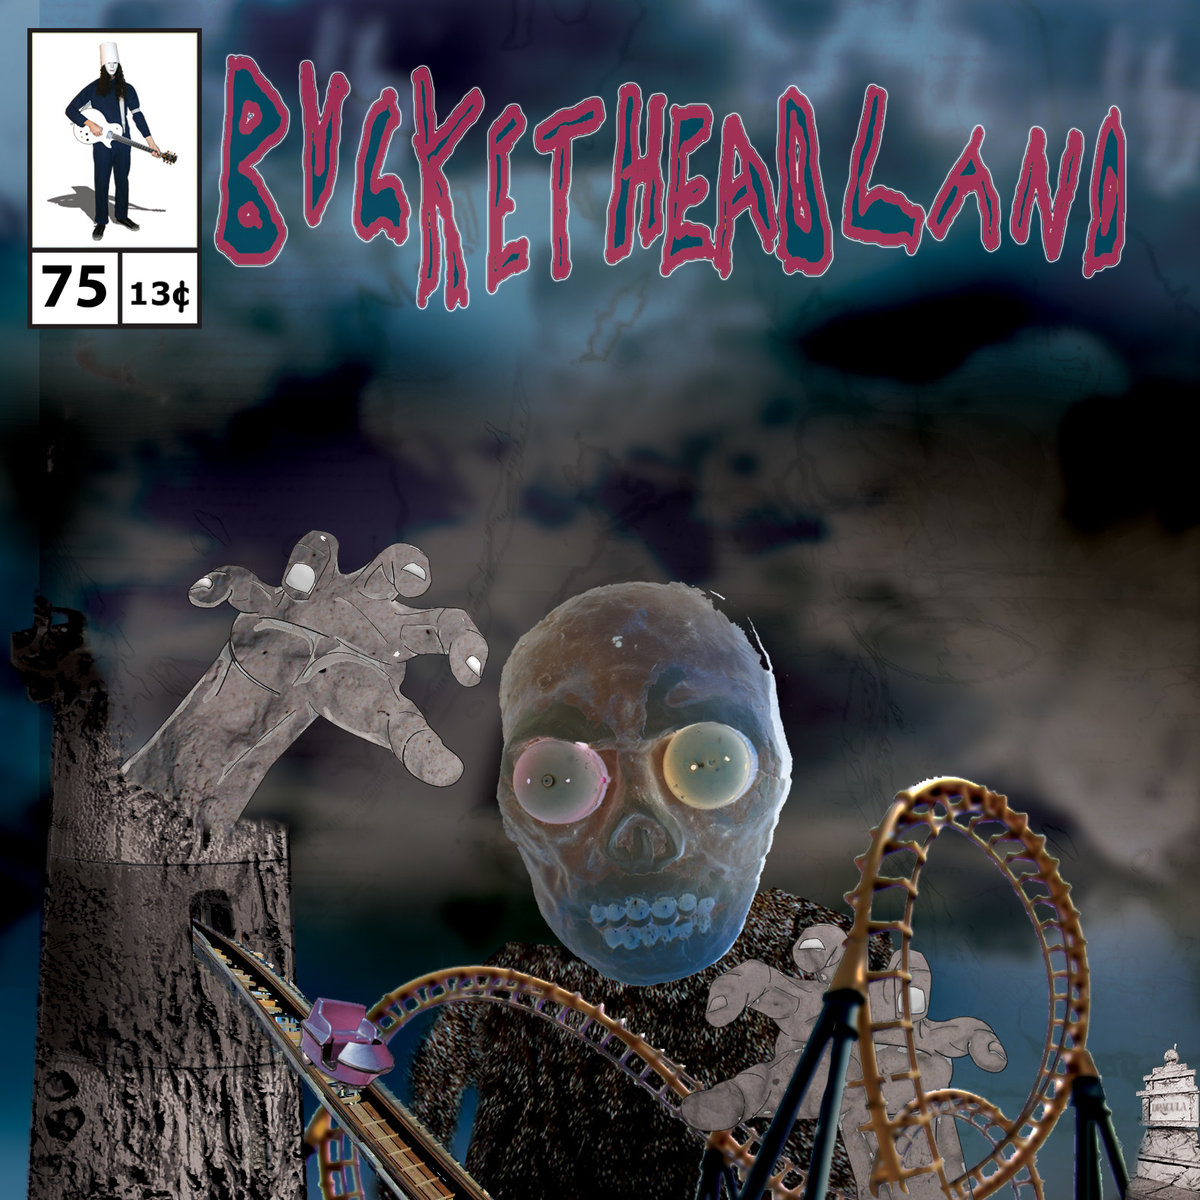 Buckethead - Pike 75: Twilight Constrictor (2014)